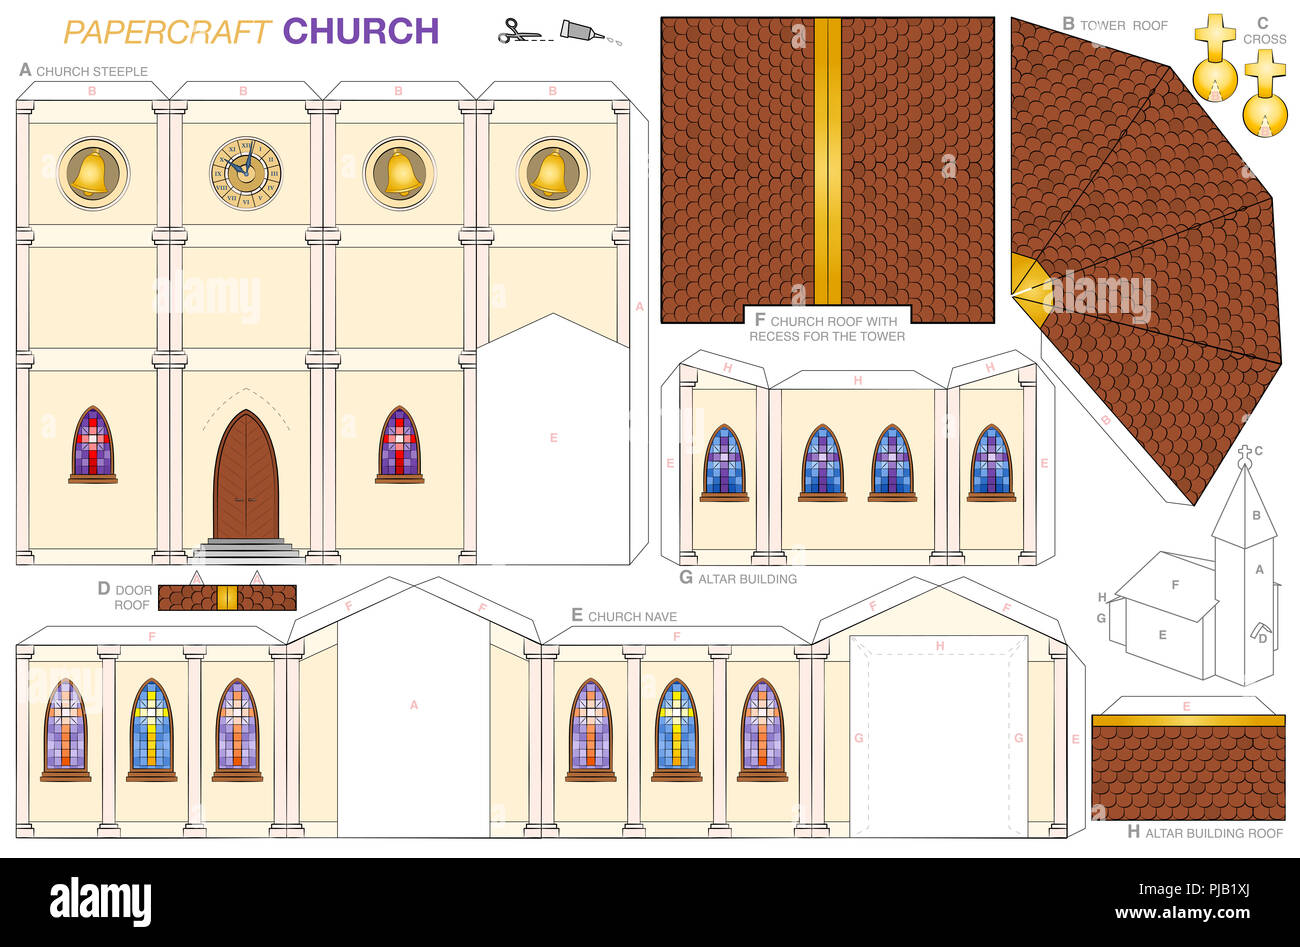 Edificio de la iglesia de papel artesanal modelo. Hoja de corte para hacer  un 3D detallada maqueta iglesia con torre, nave, altar, coloridos de  extensión de windows Fotografía de stock - Alamy